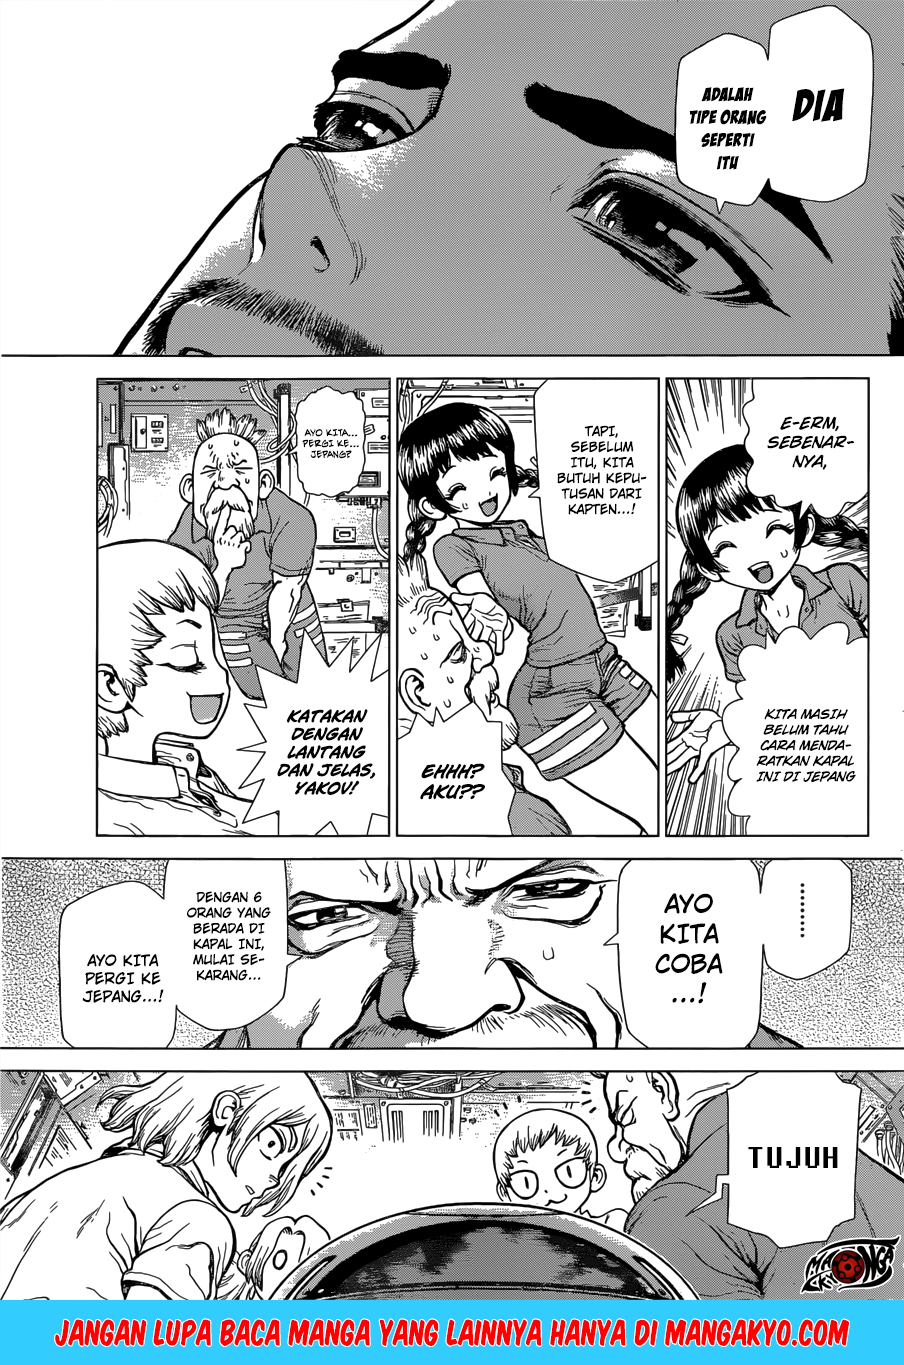 Dr. Stone Reboot: Byakuya Chapter 1